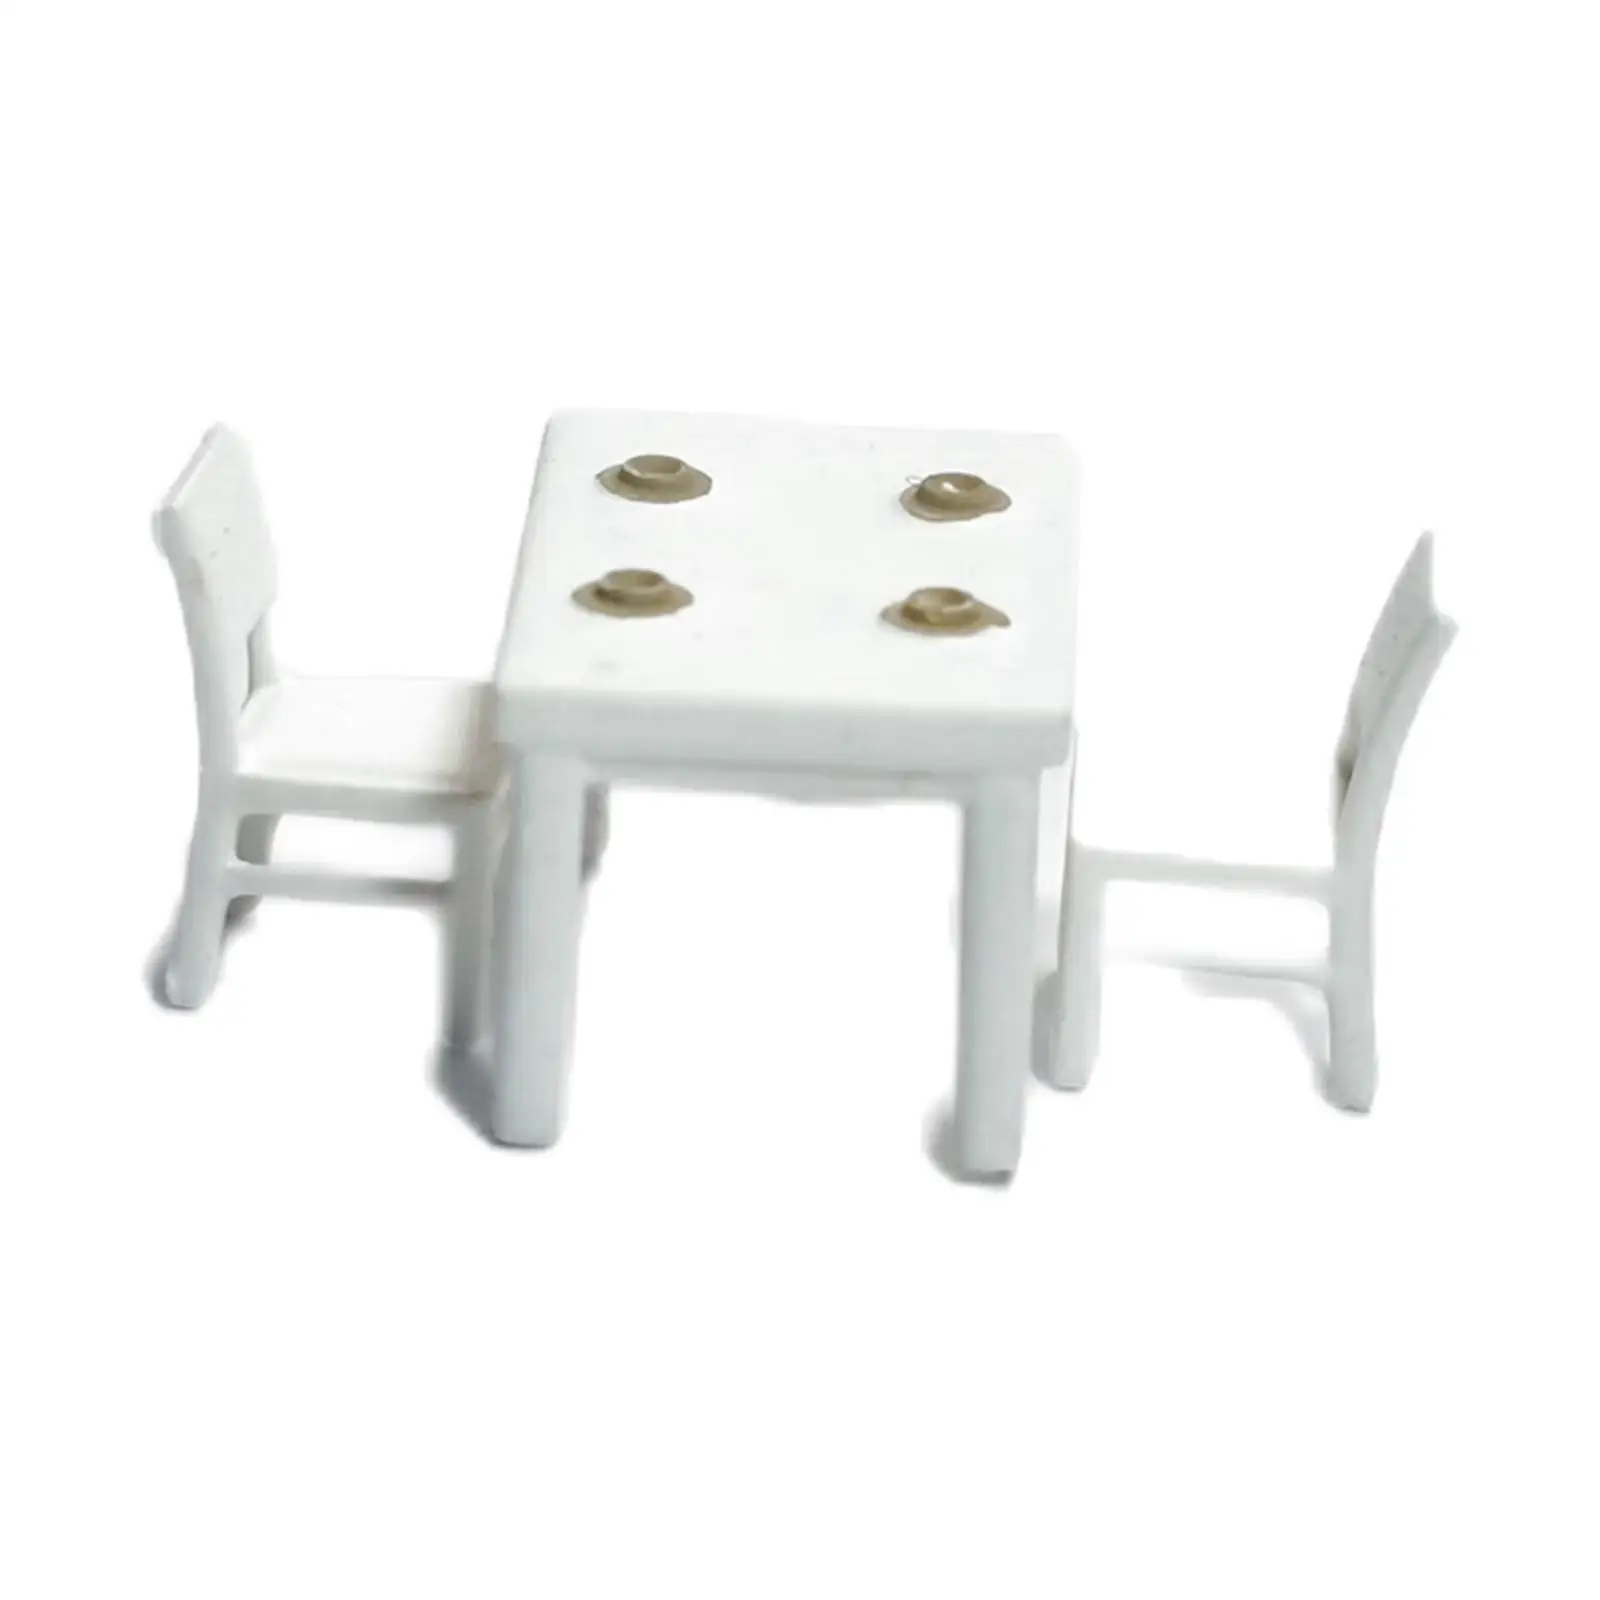 3Pcs 1:64 Scale Furniture Model Desktop Ornament Trains Architectural Resin Crafts Sand Table Layout Decoration Table Chair Set